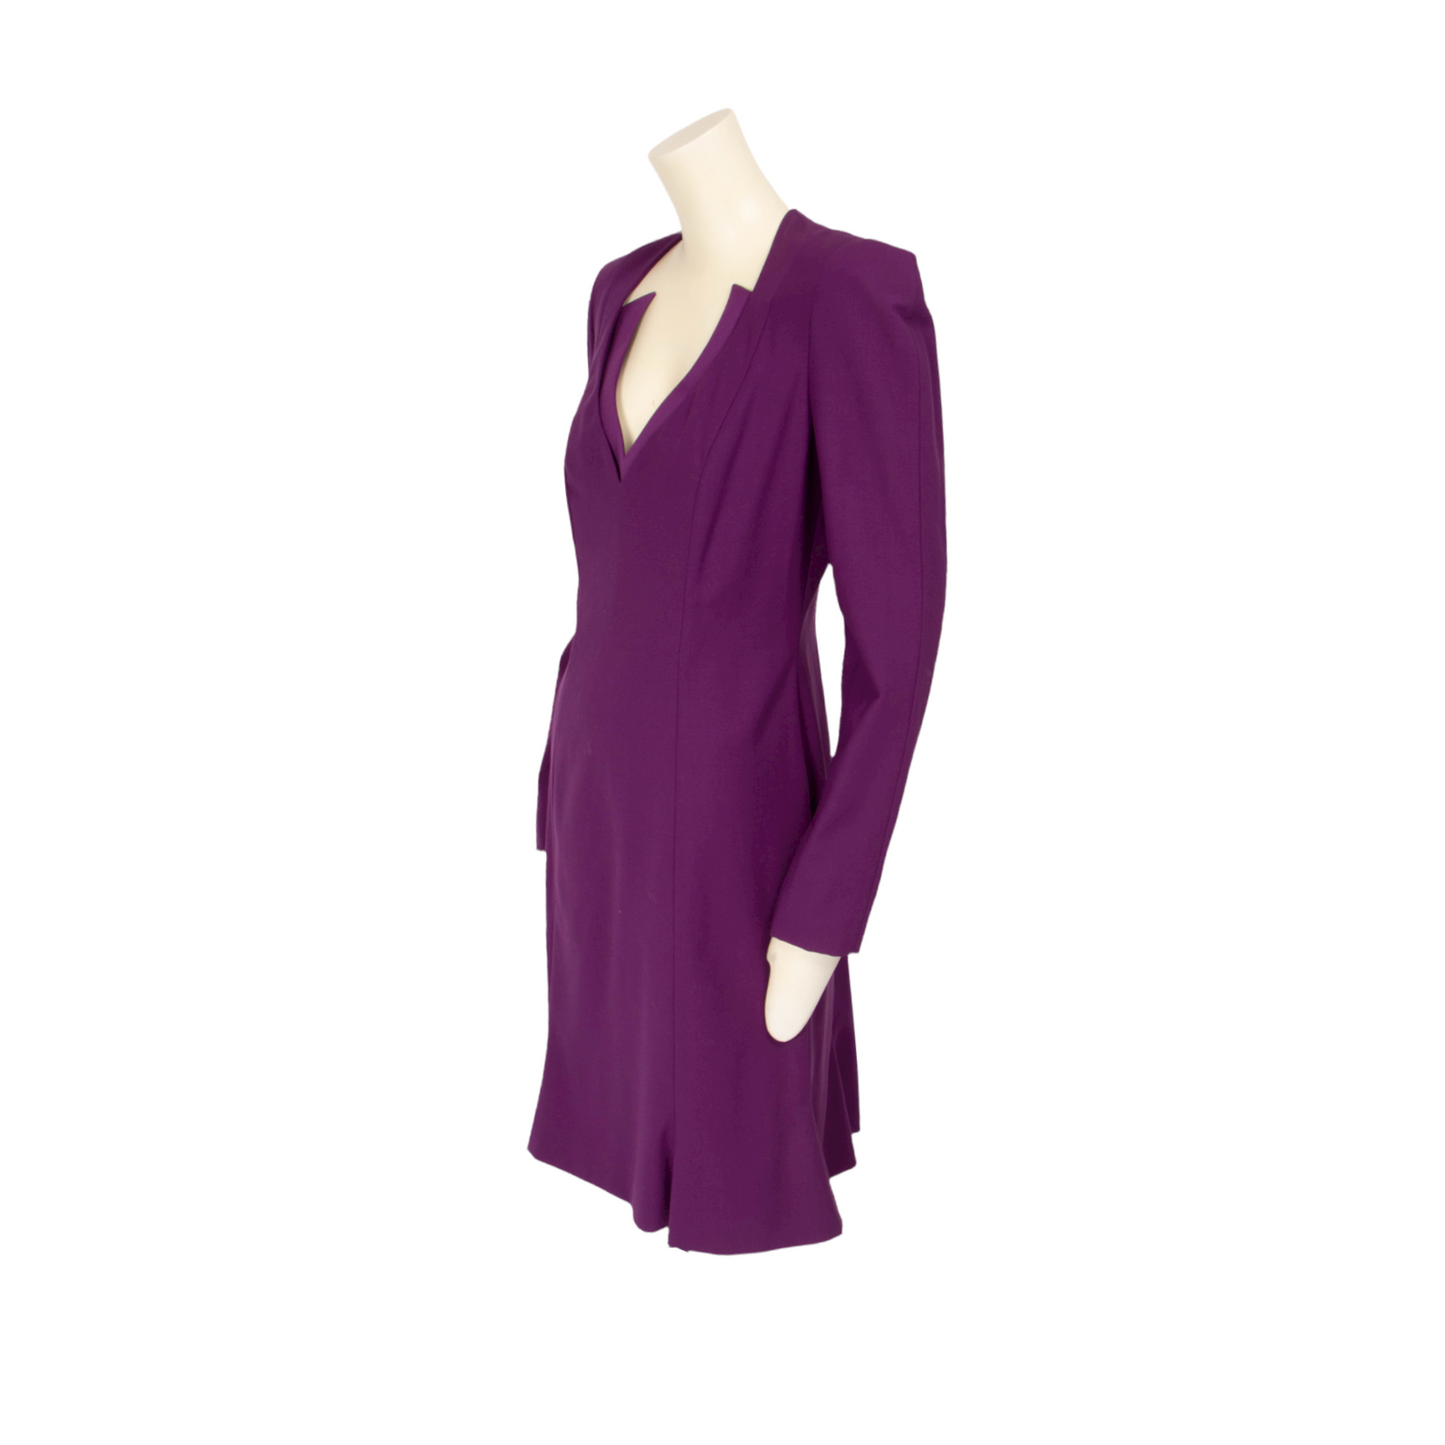 Thierry Mugler vintage purple long-sleeved dress - L - 1990s